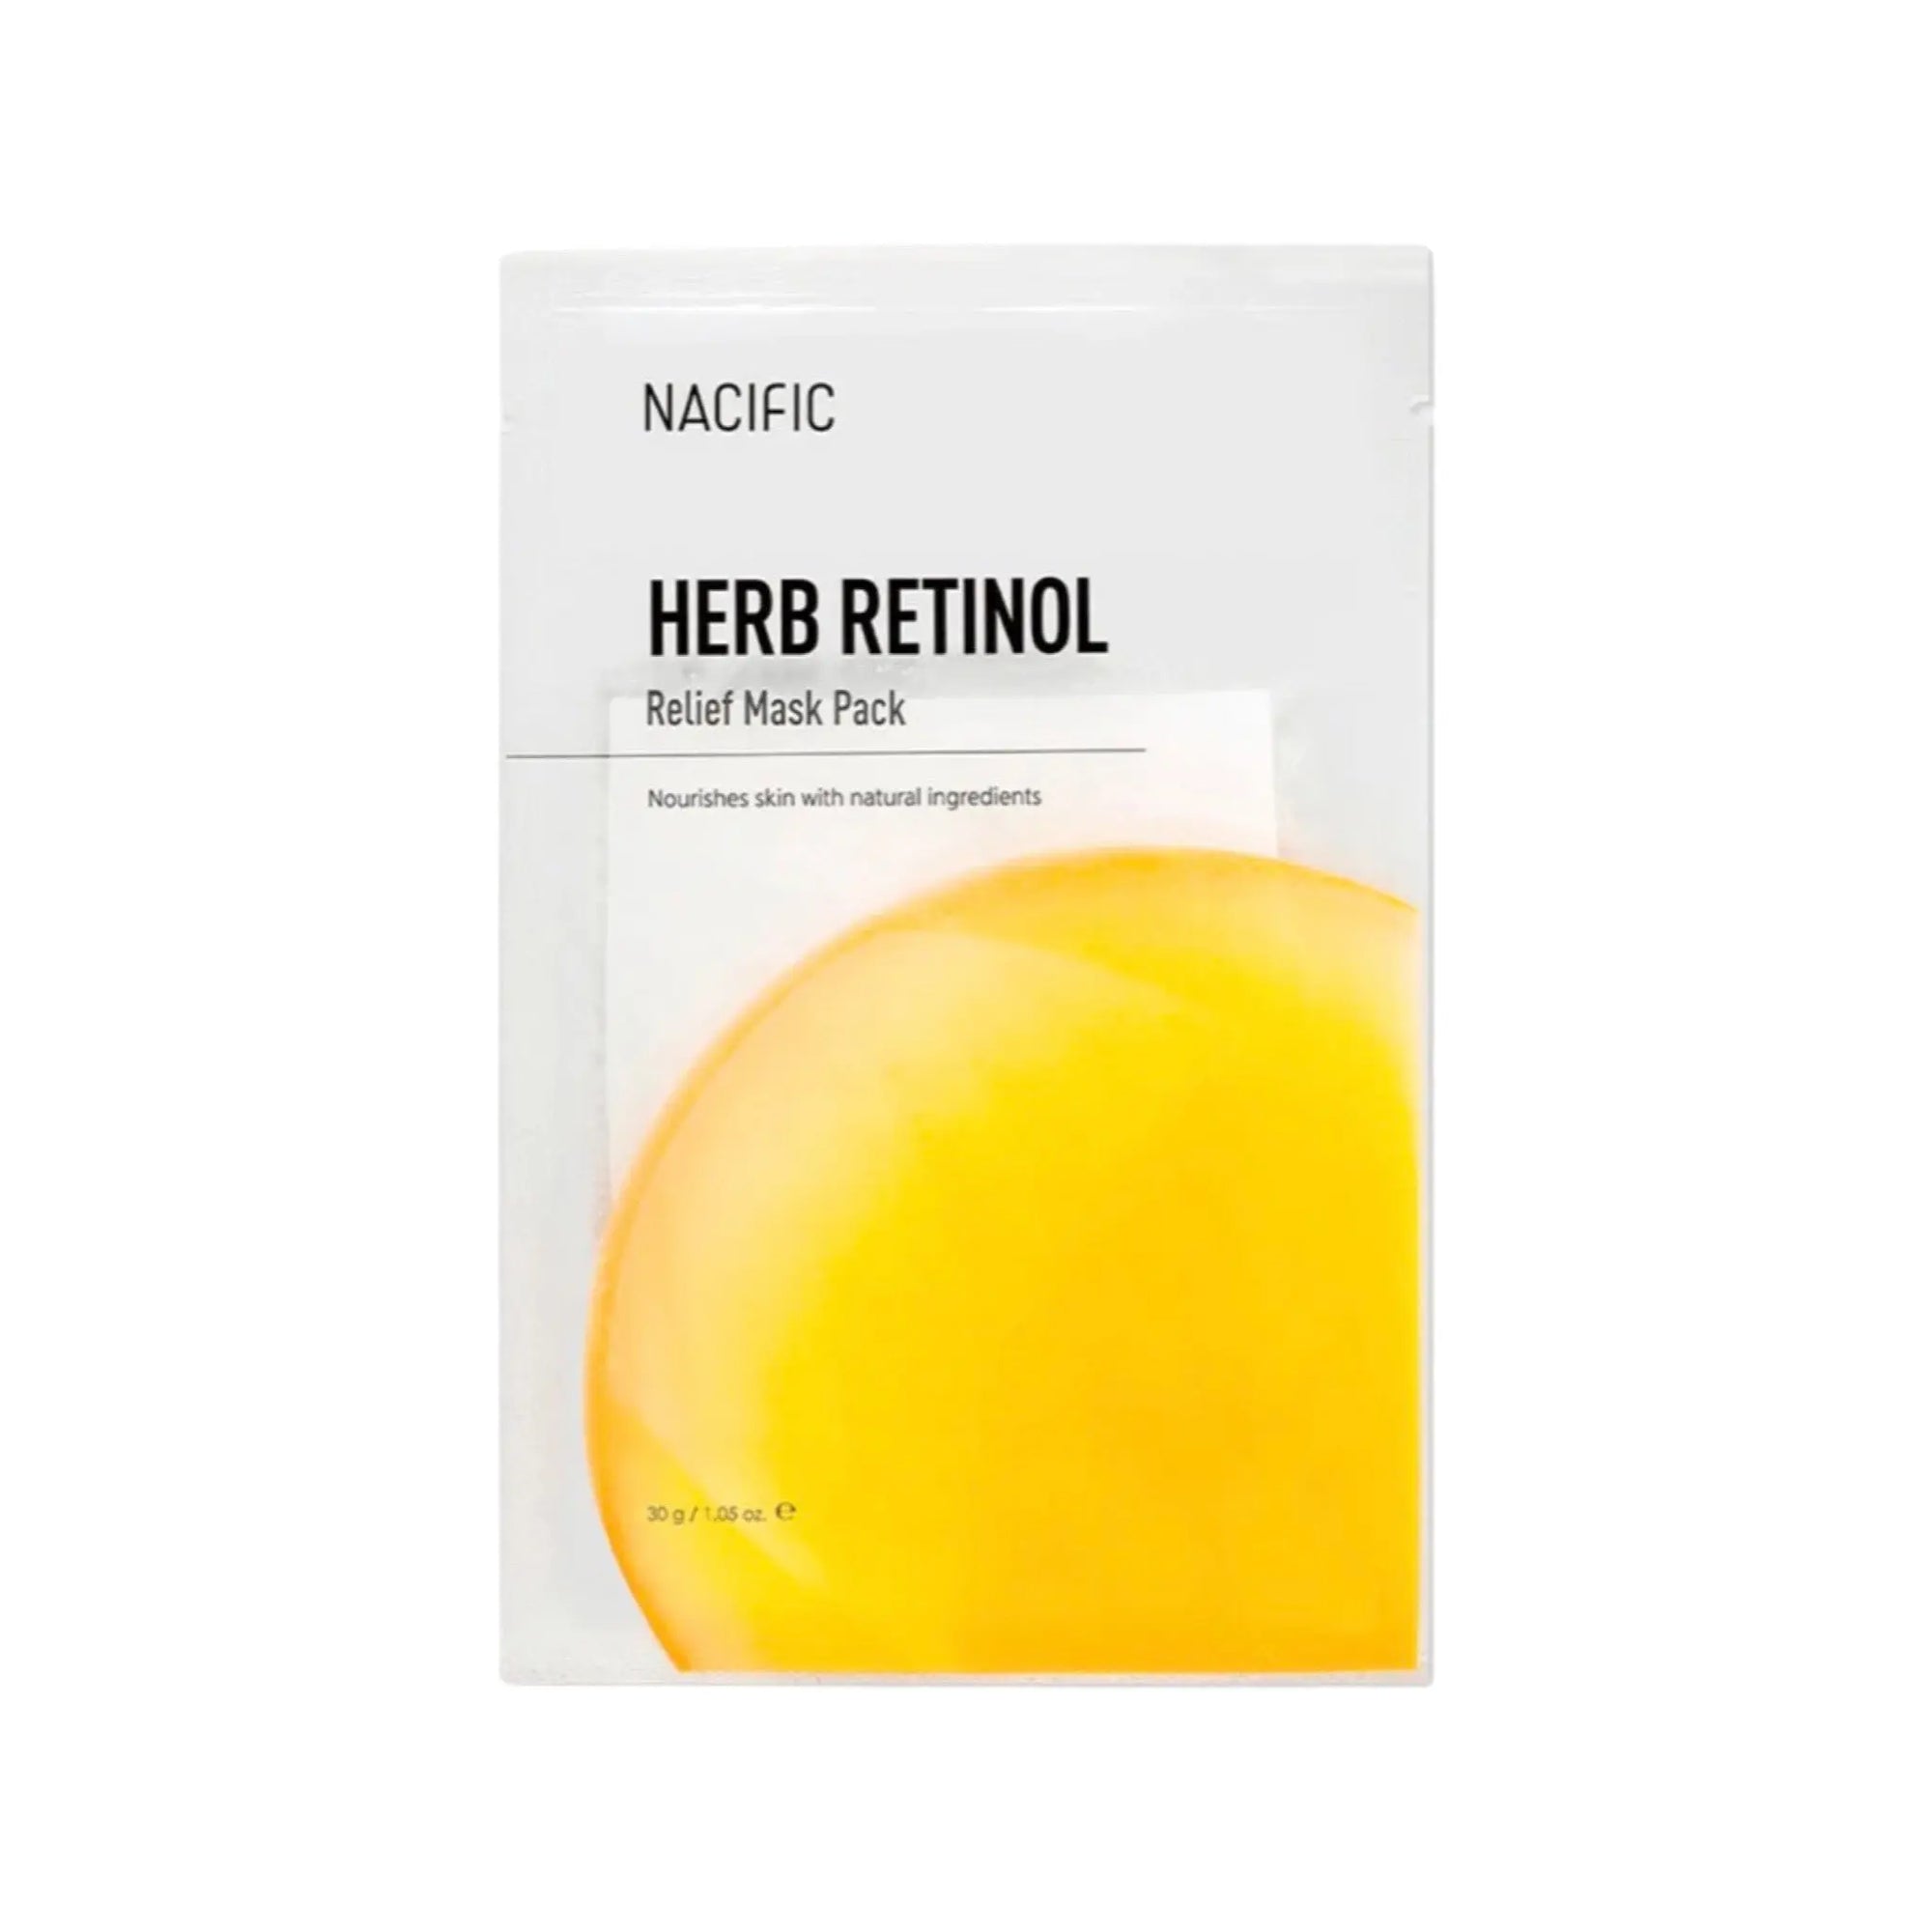 Nacific - Herb Retinol Relief Mask Pack 30g Nacific